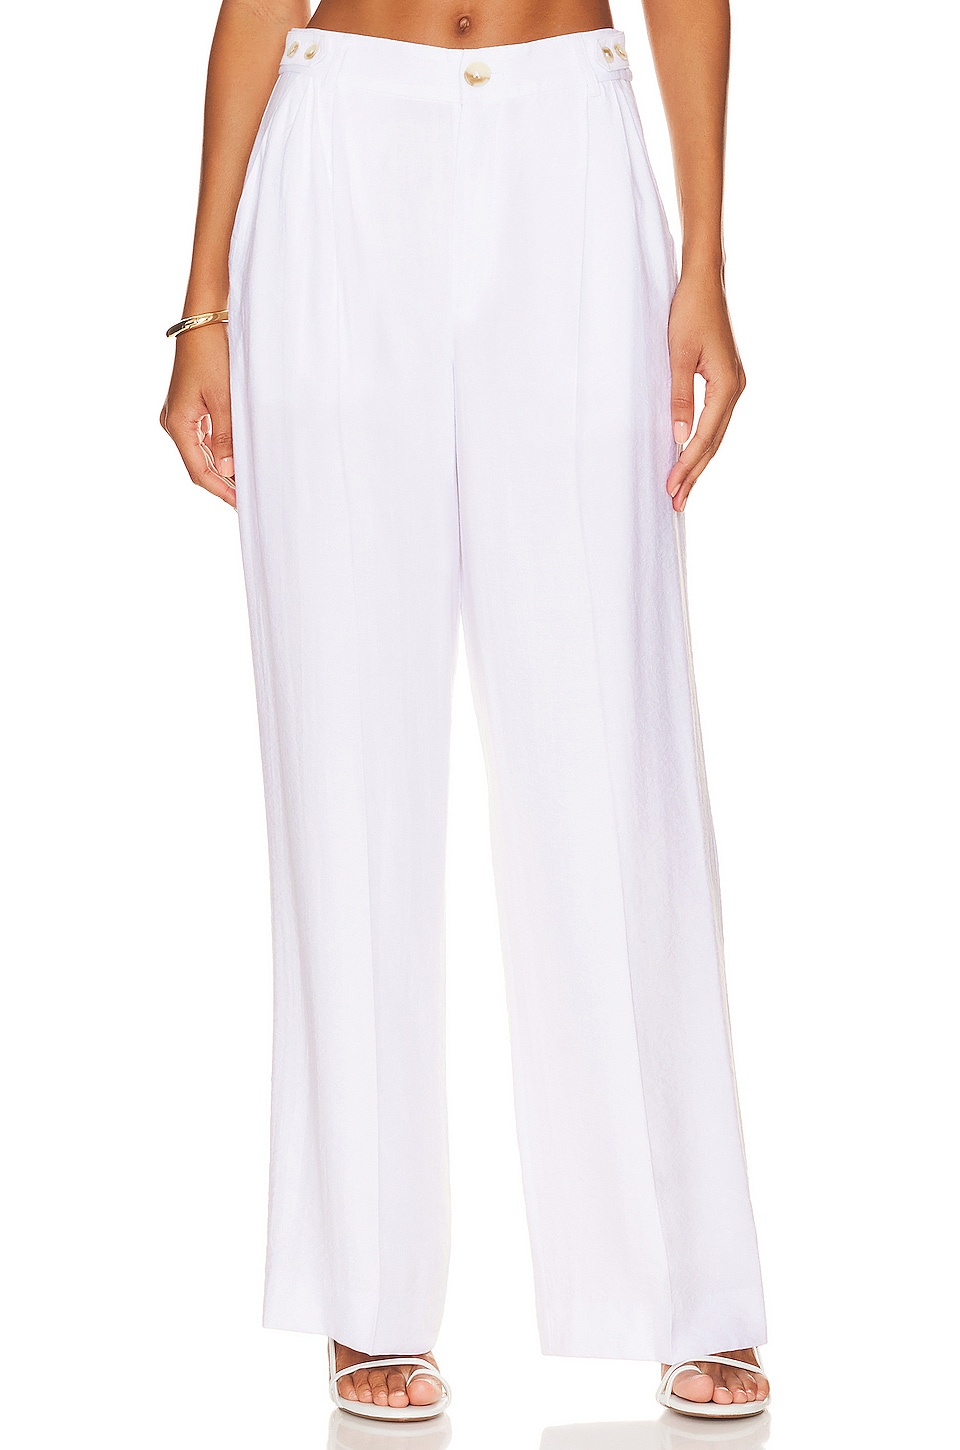 white wide-leg pants for spring capsule wardrobe